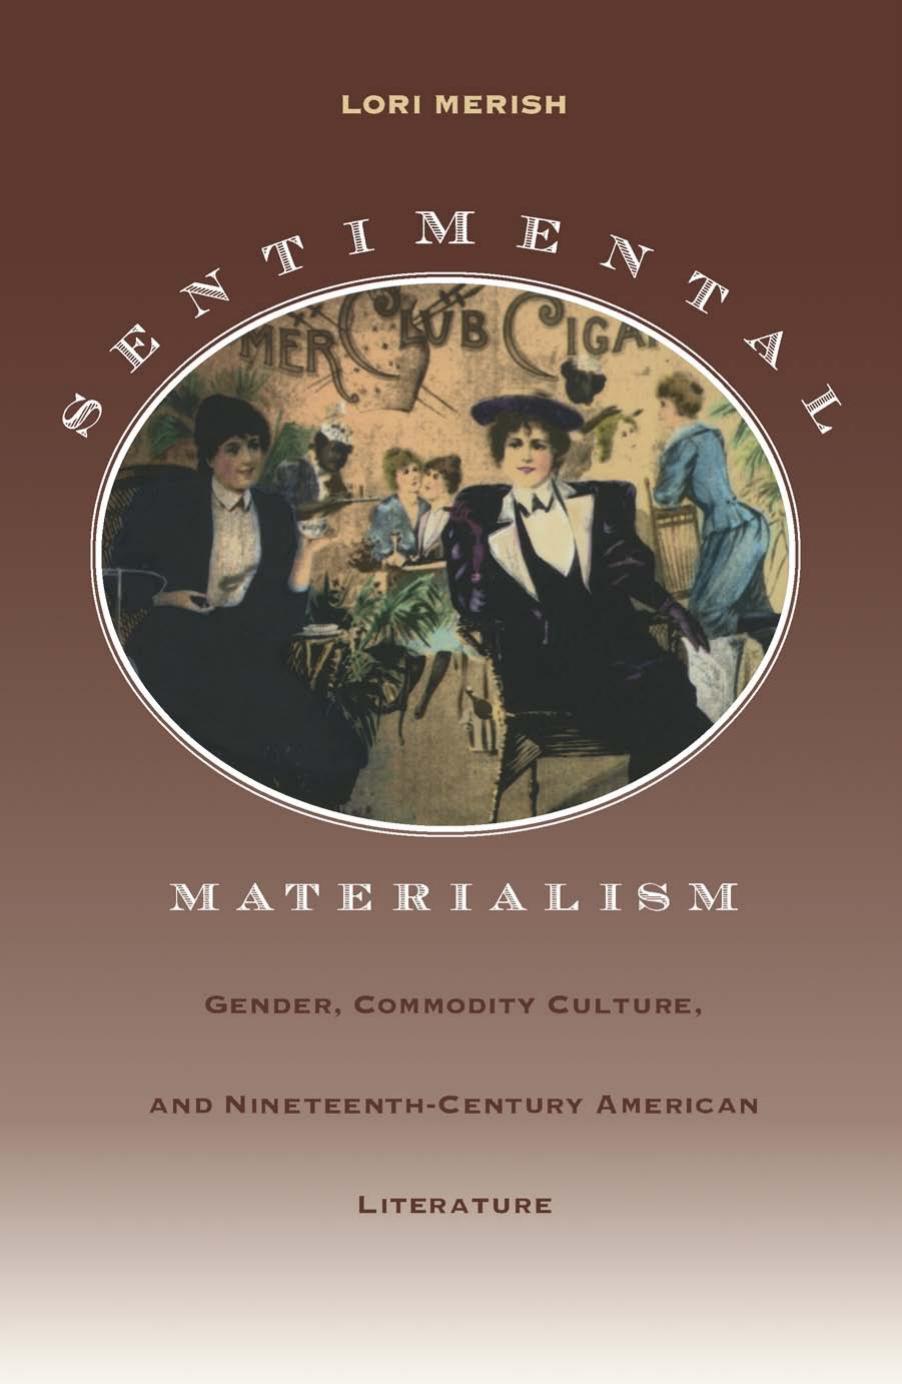 Sentimental Materialism: Gender, Commodity Culture, and Nineteenth-Century American Literature by Lori Merish